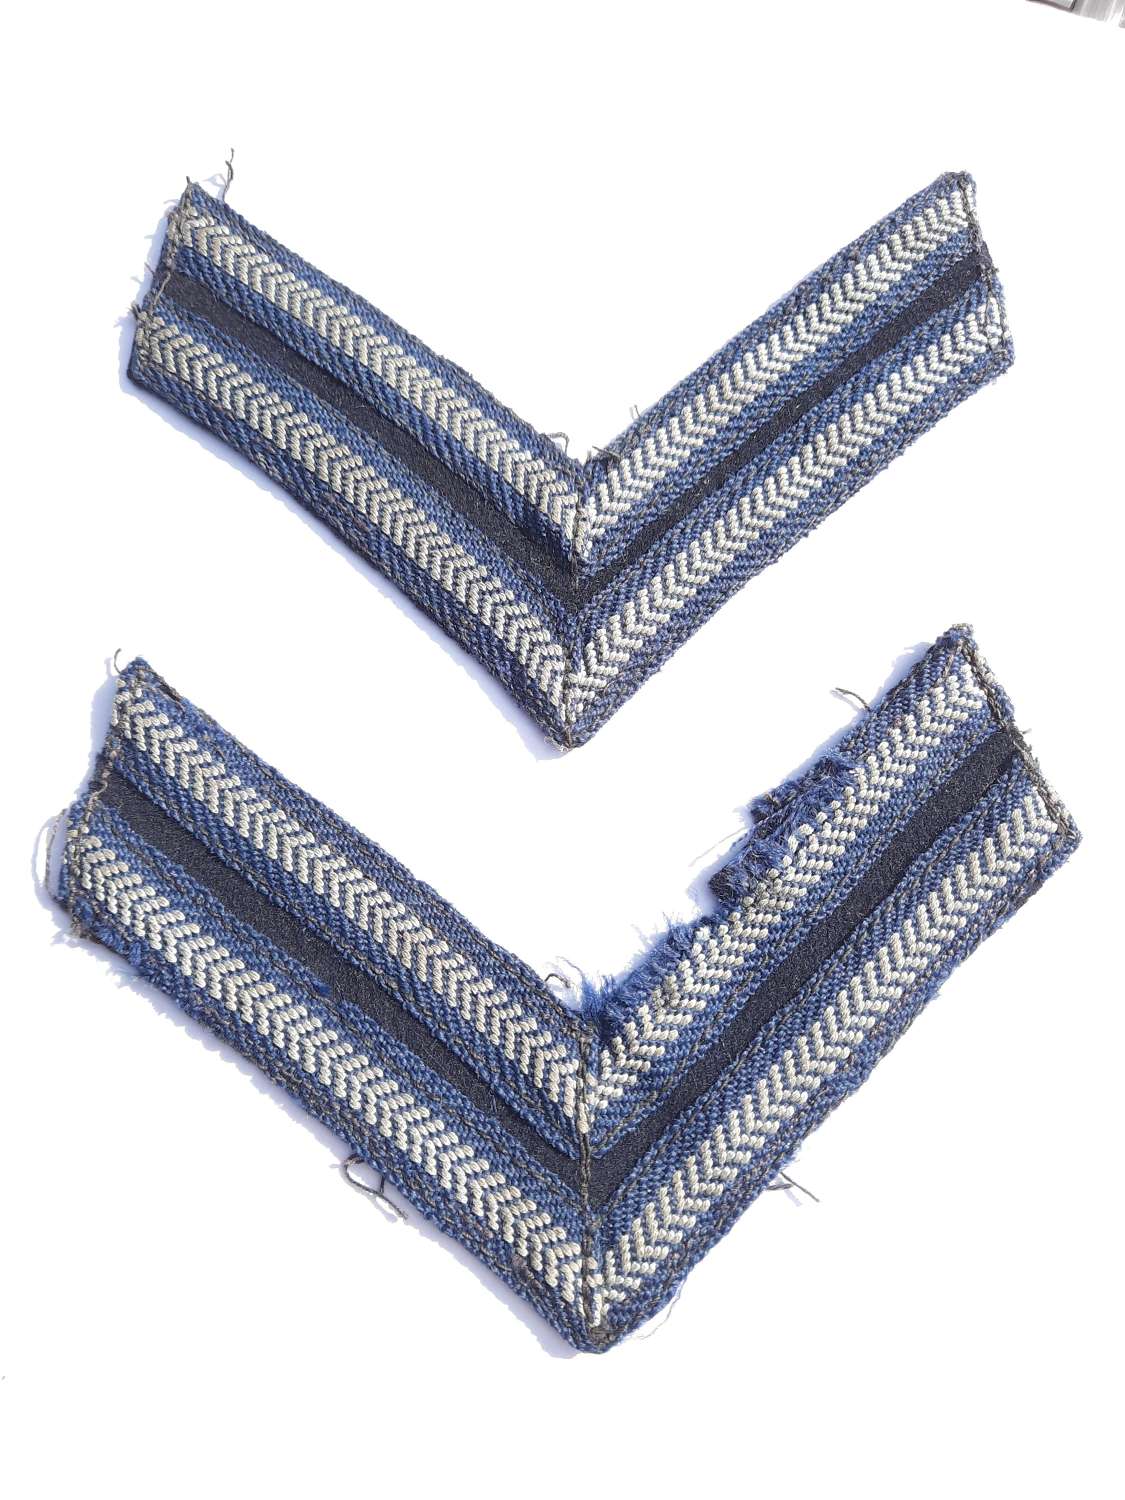 RAF Corporal Stripes Pair